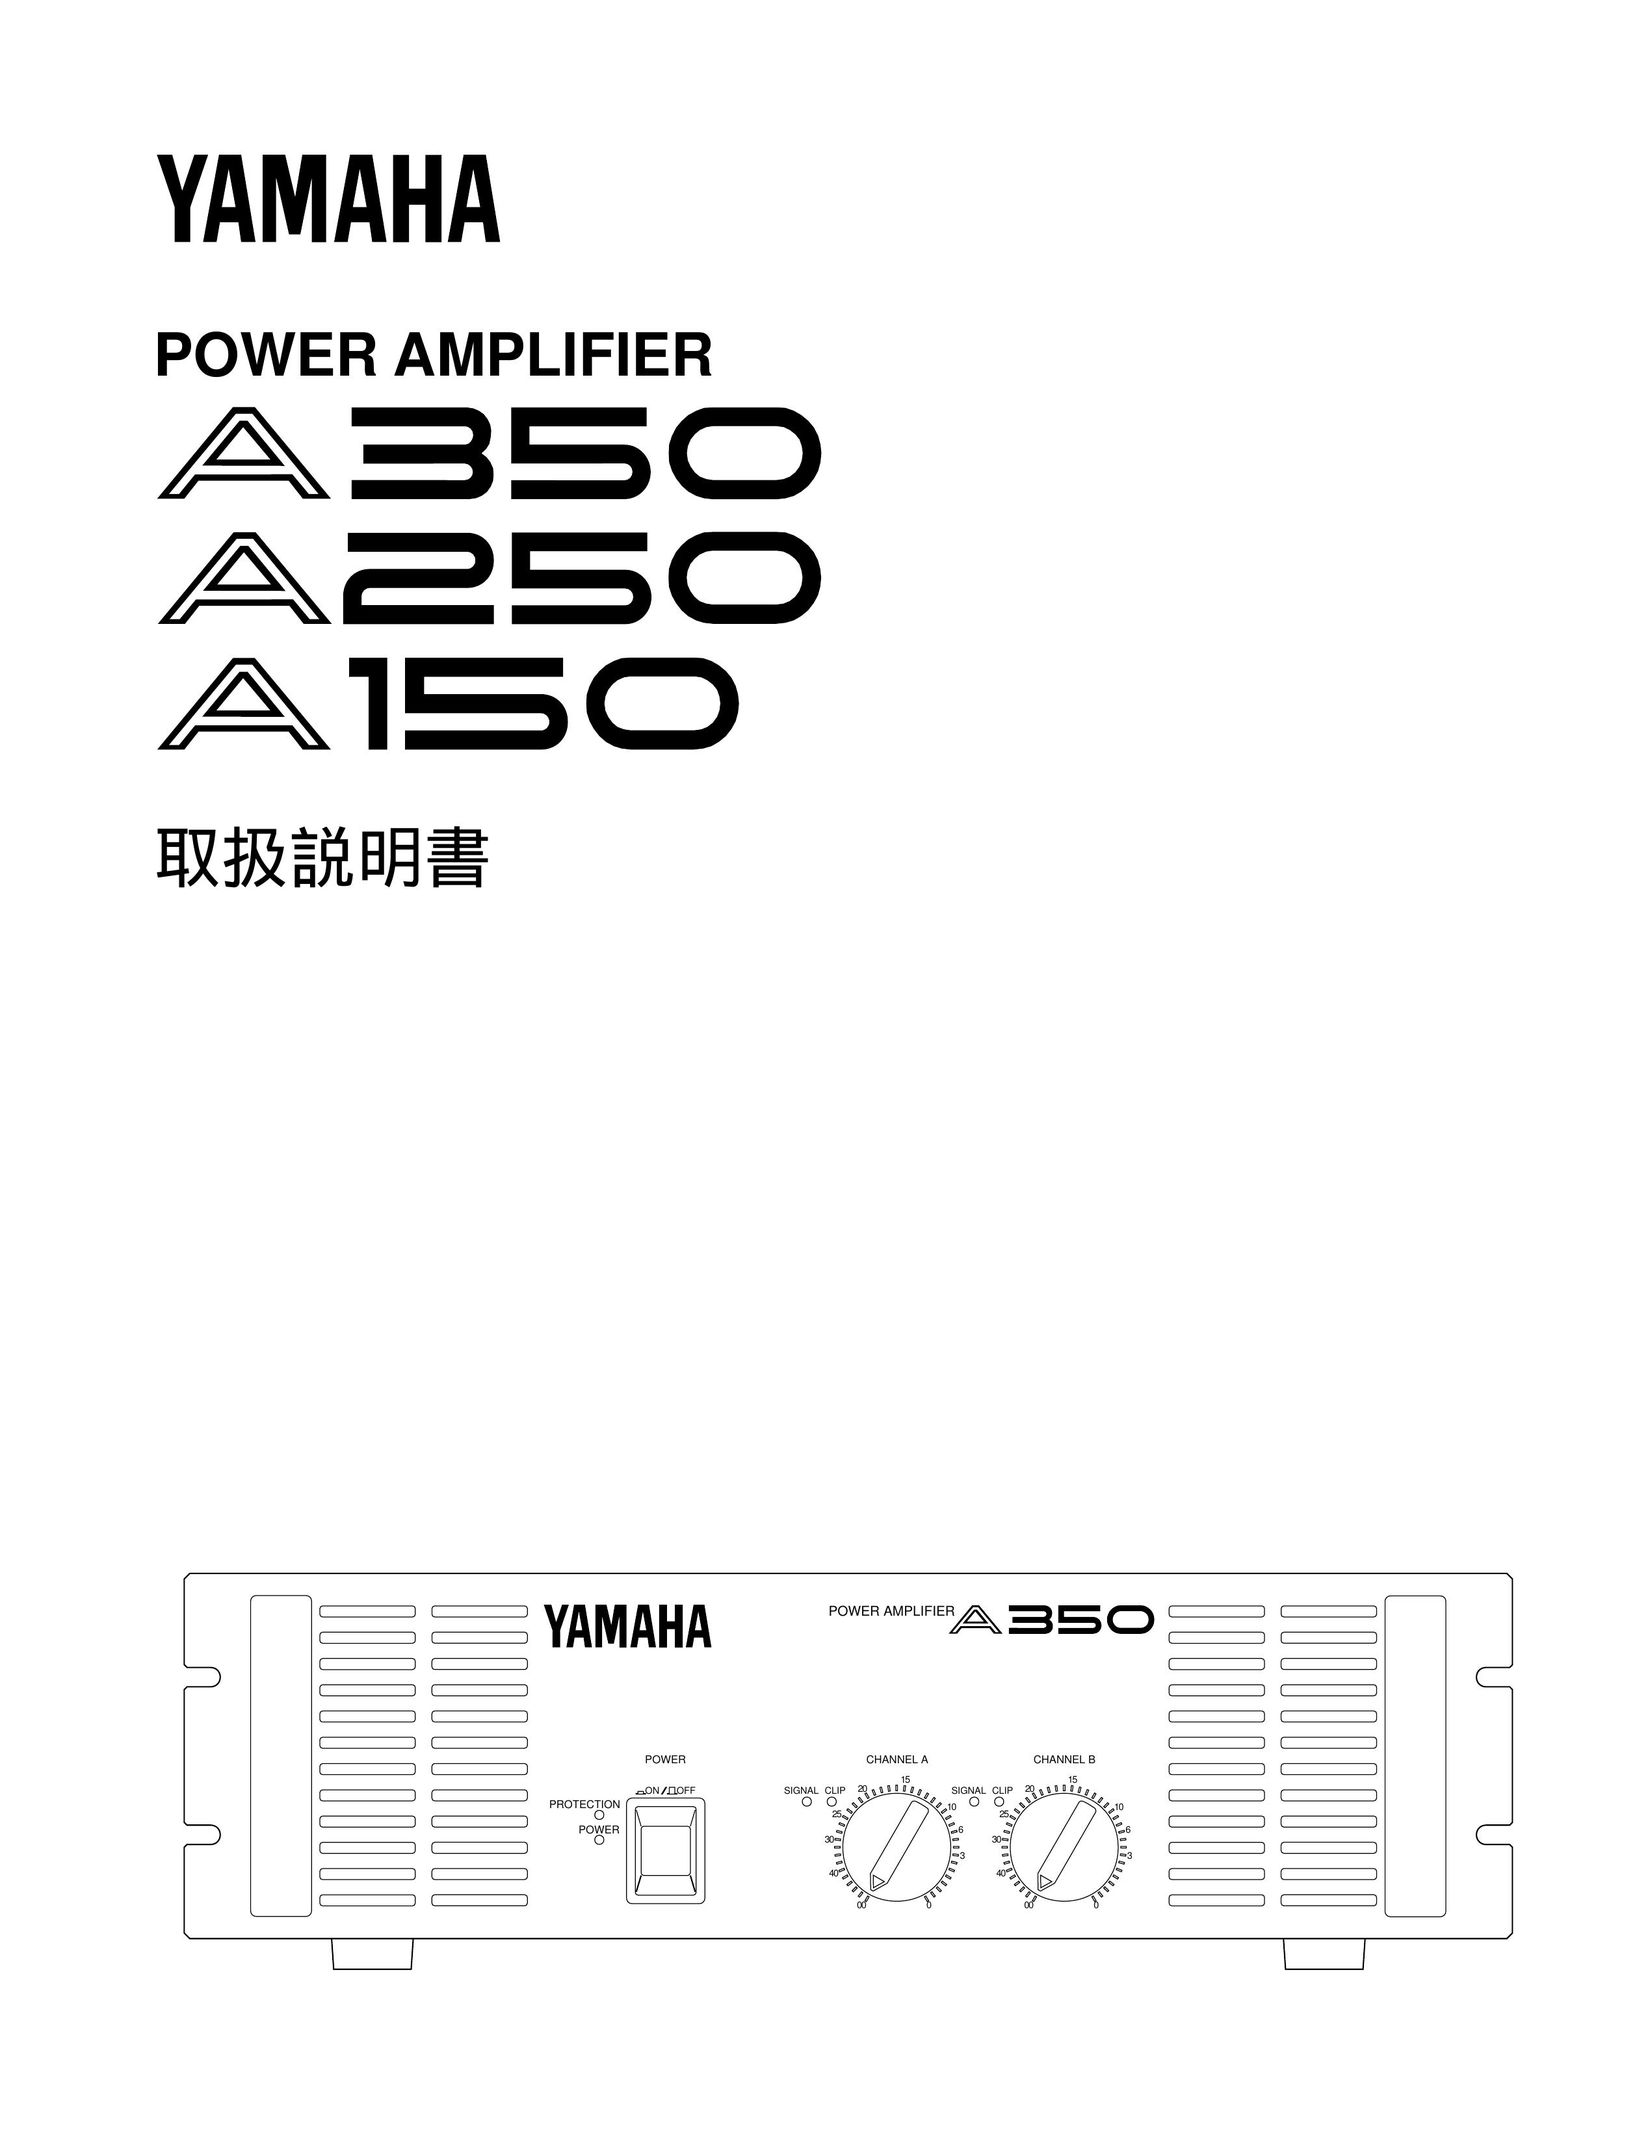 Yamaha A250 Stereo Amplifier User Manual